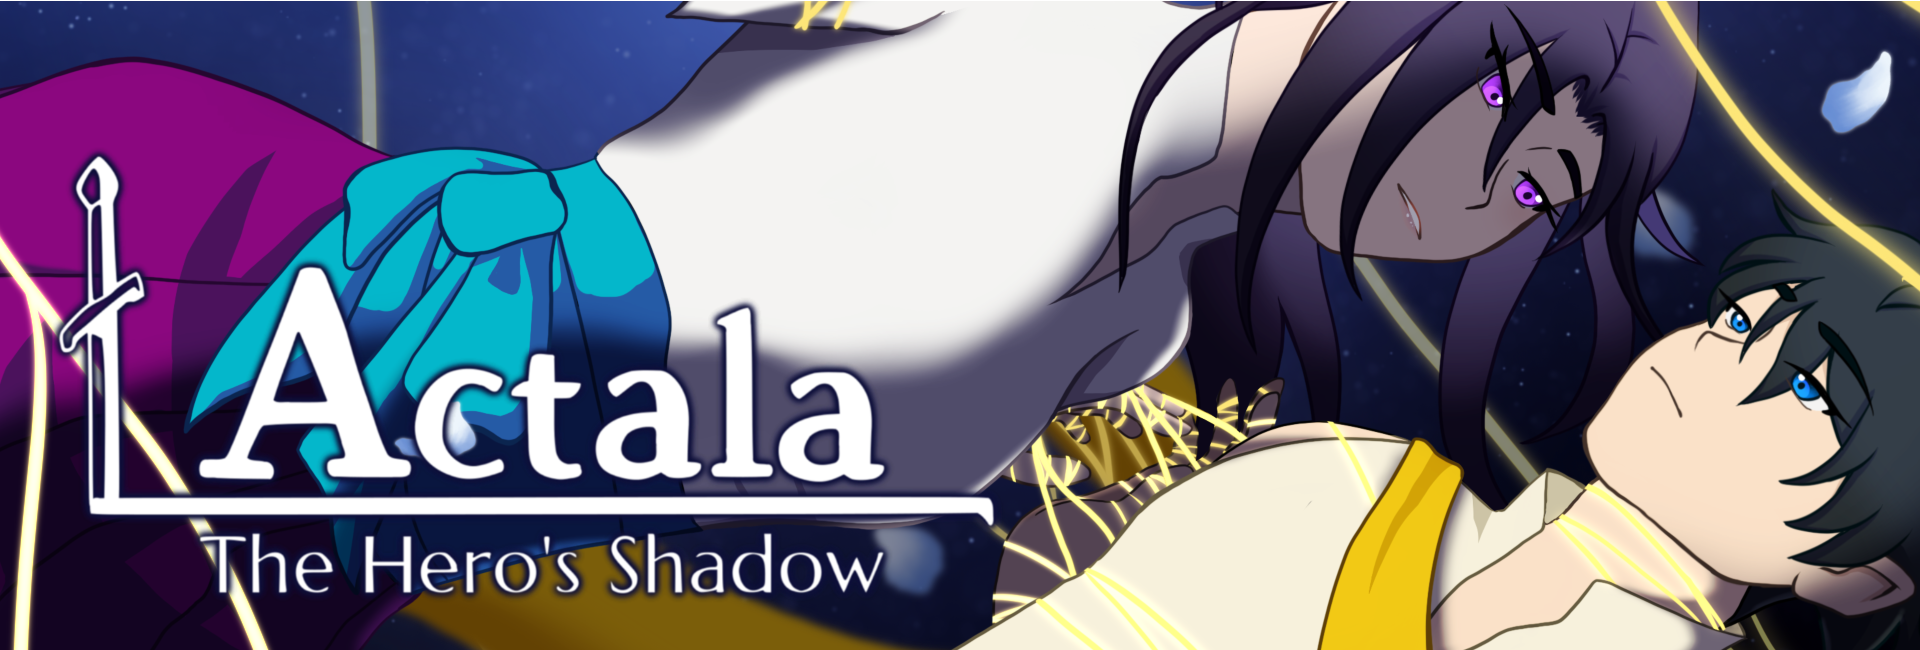 Actala: The Hero's Shadow - Act 1